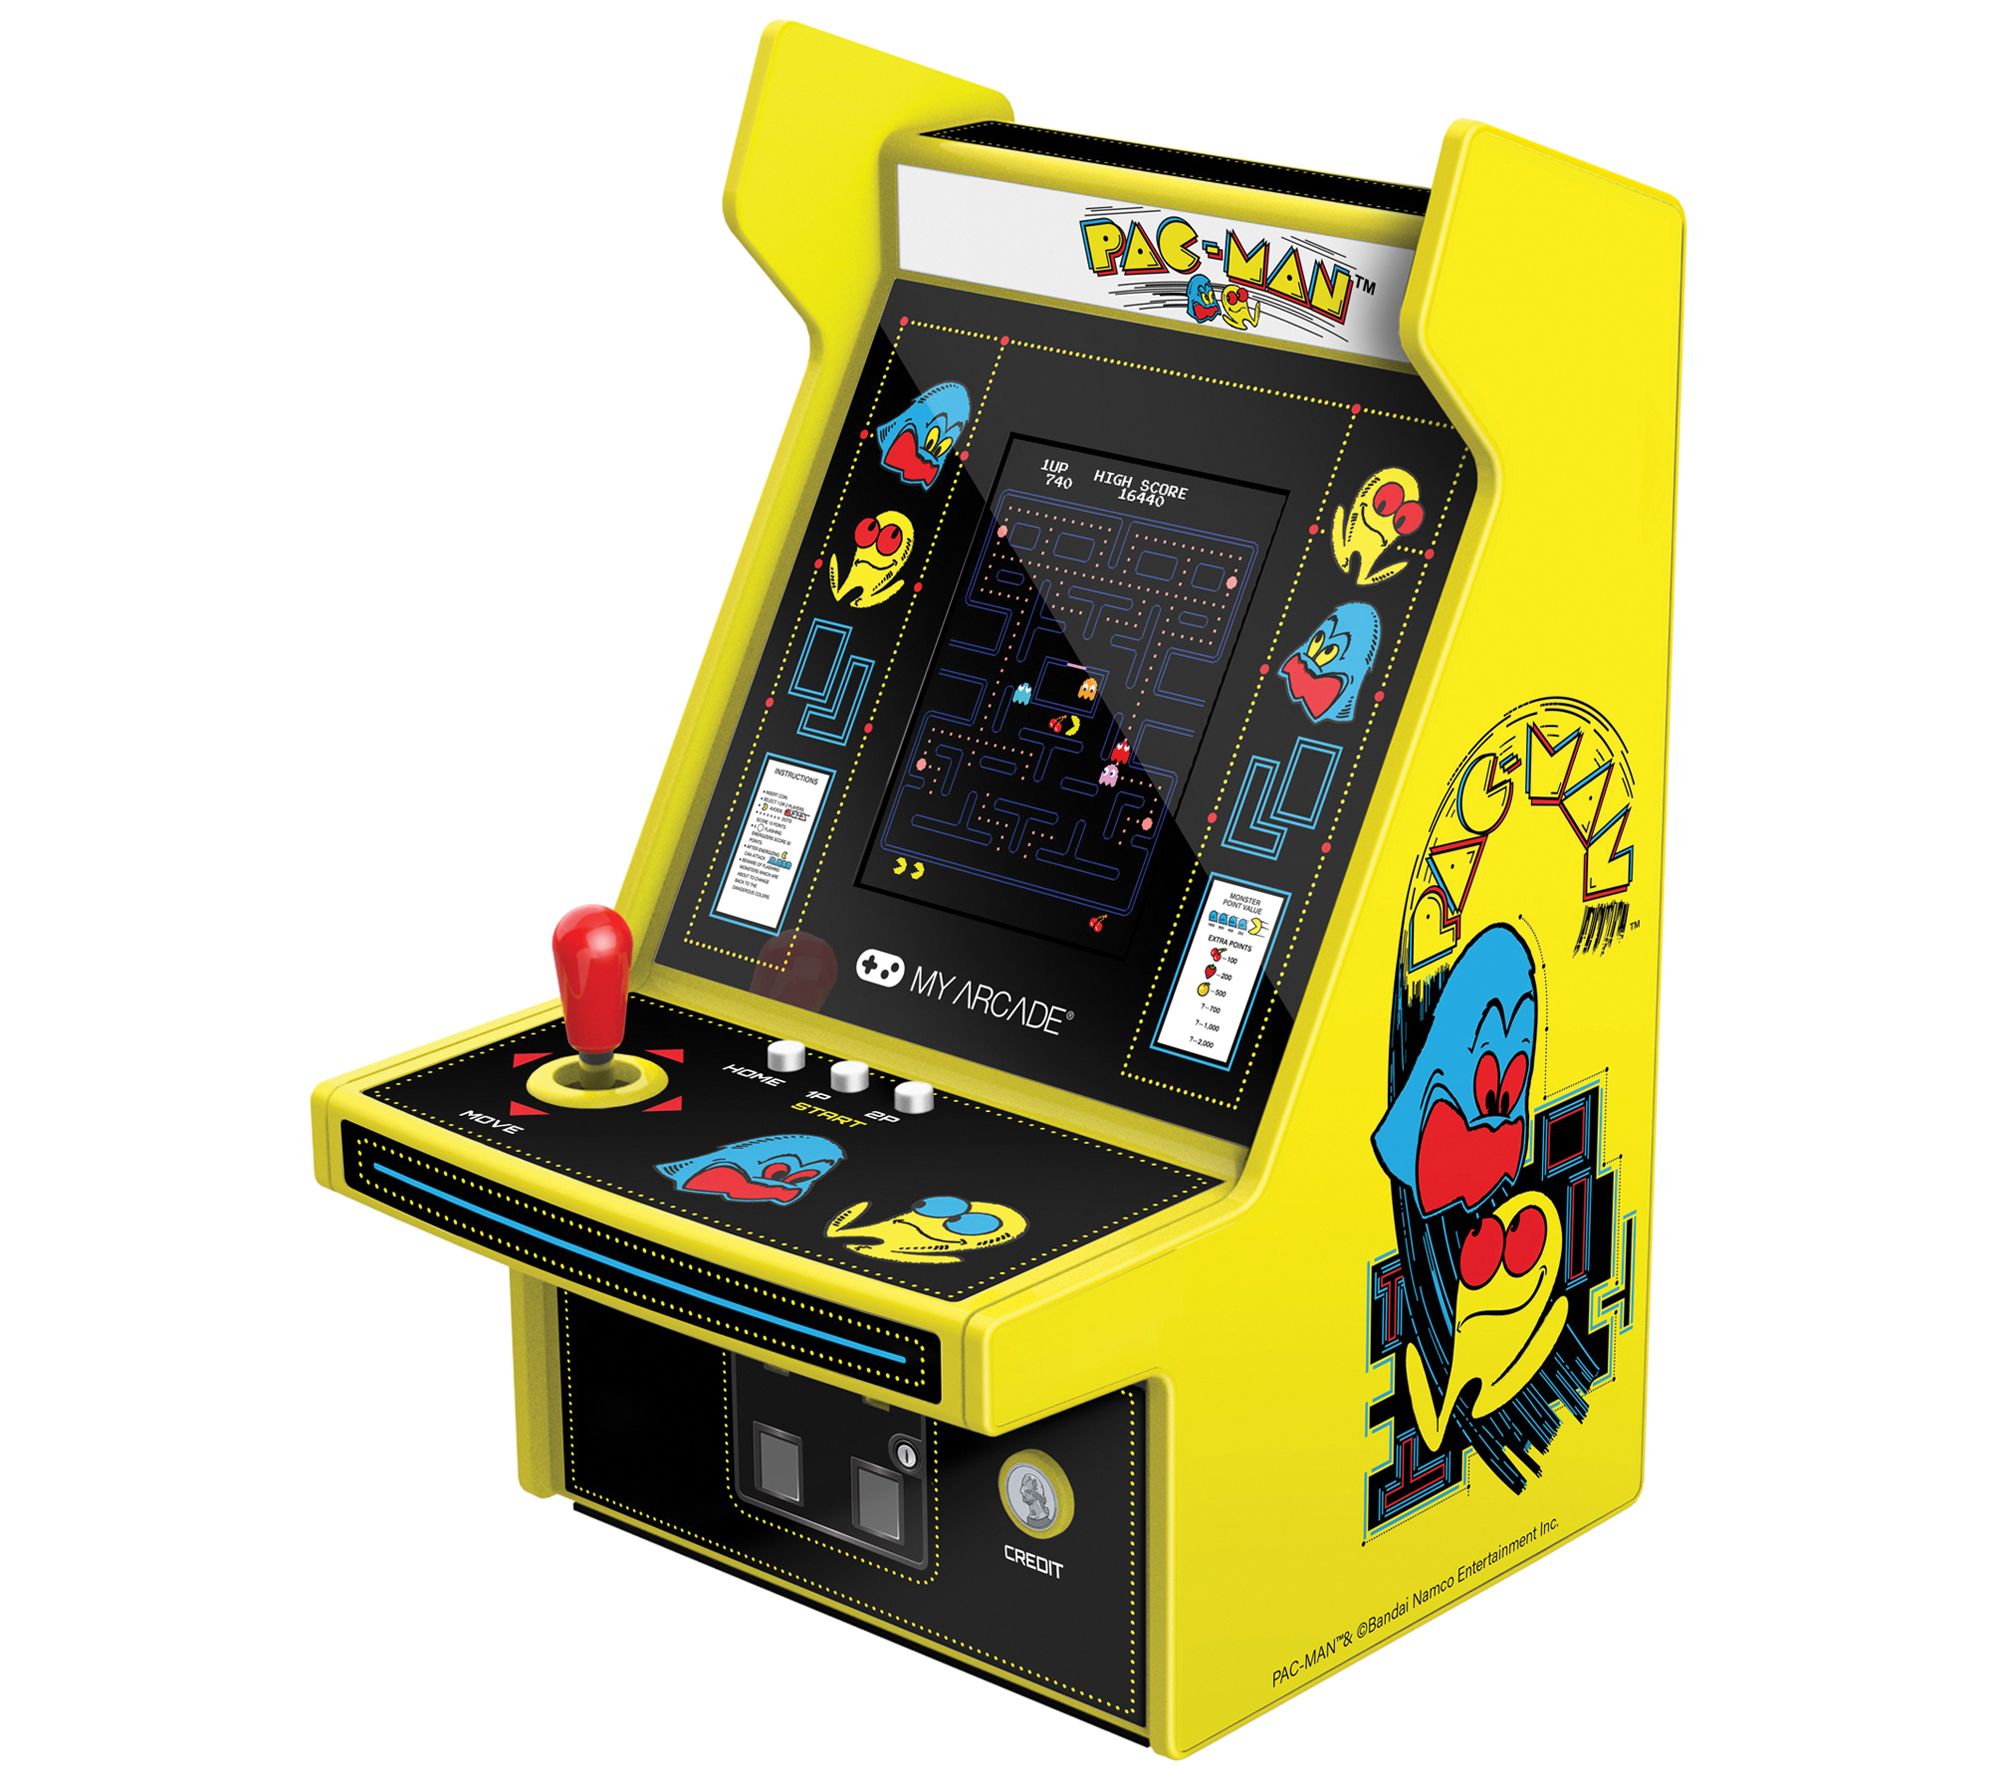 Play classic Pac-Man Arcade Game Online - Nintendo and Atari Free Game Play